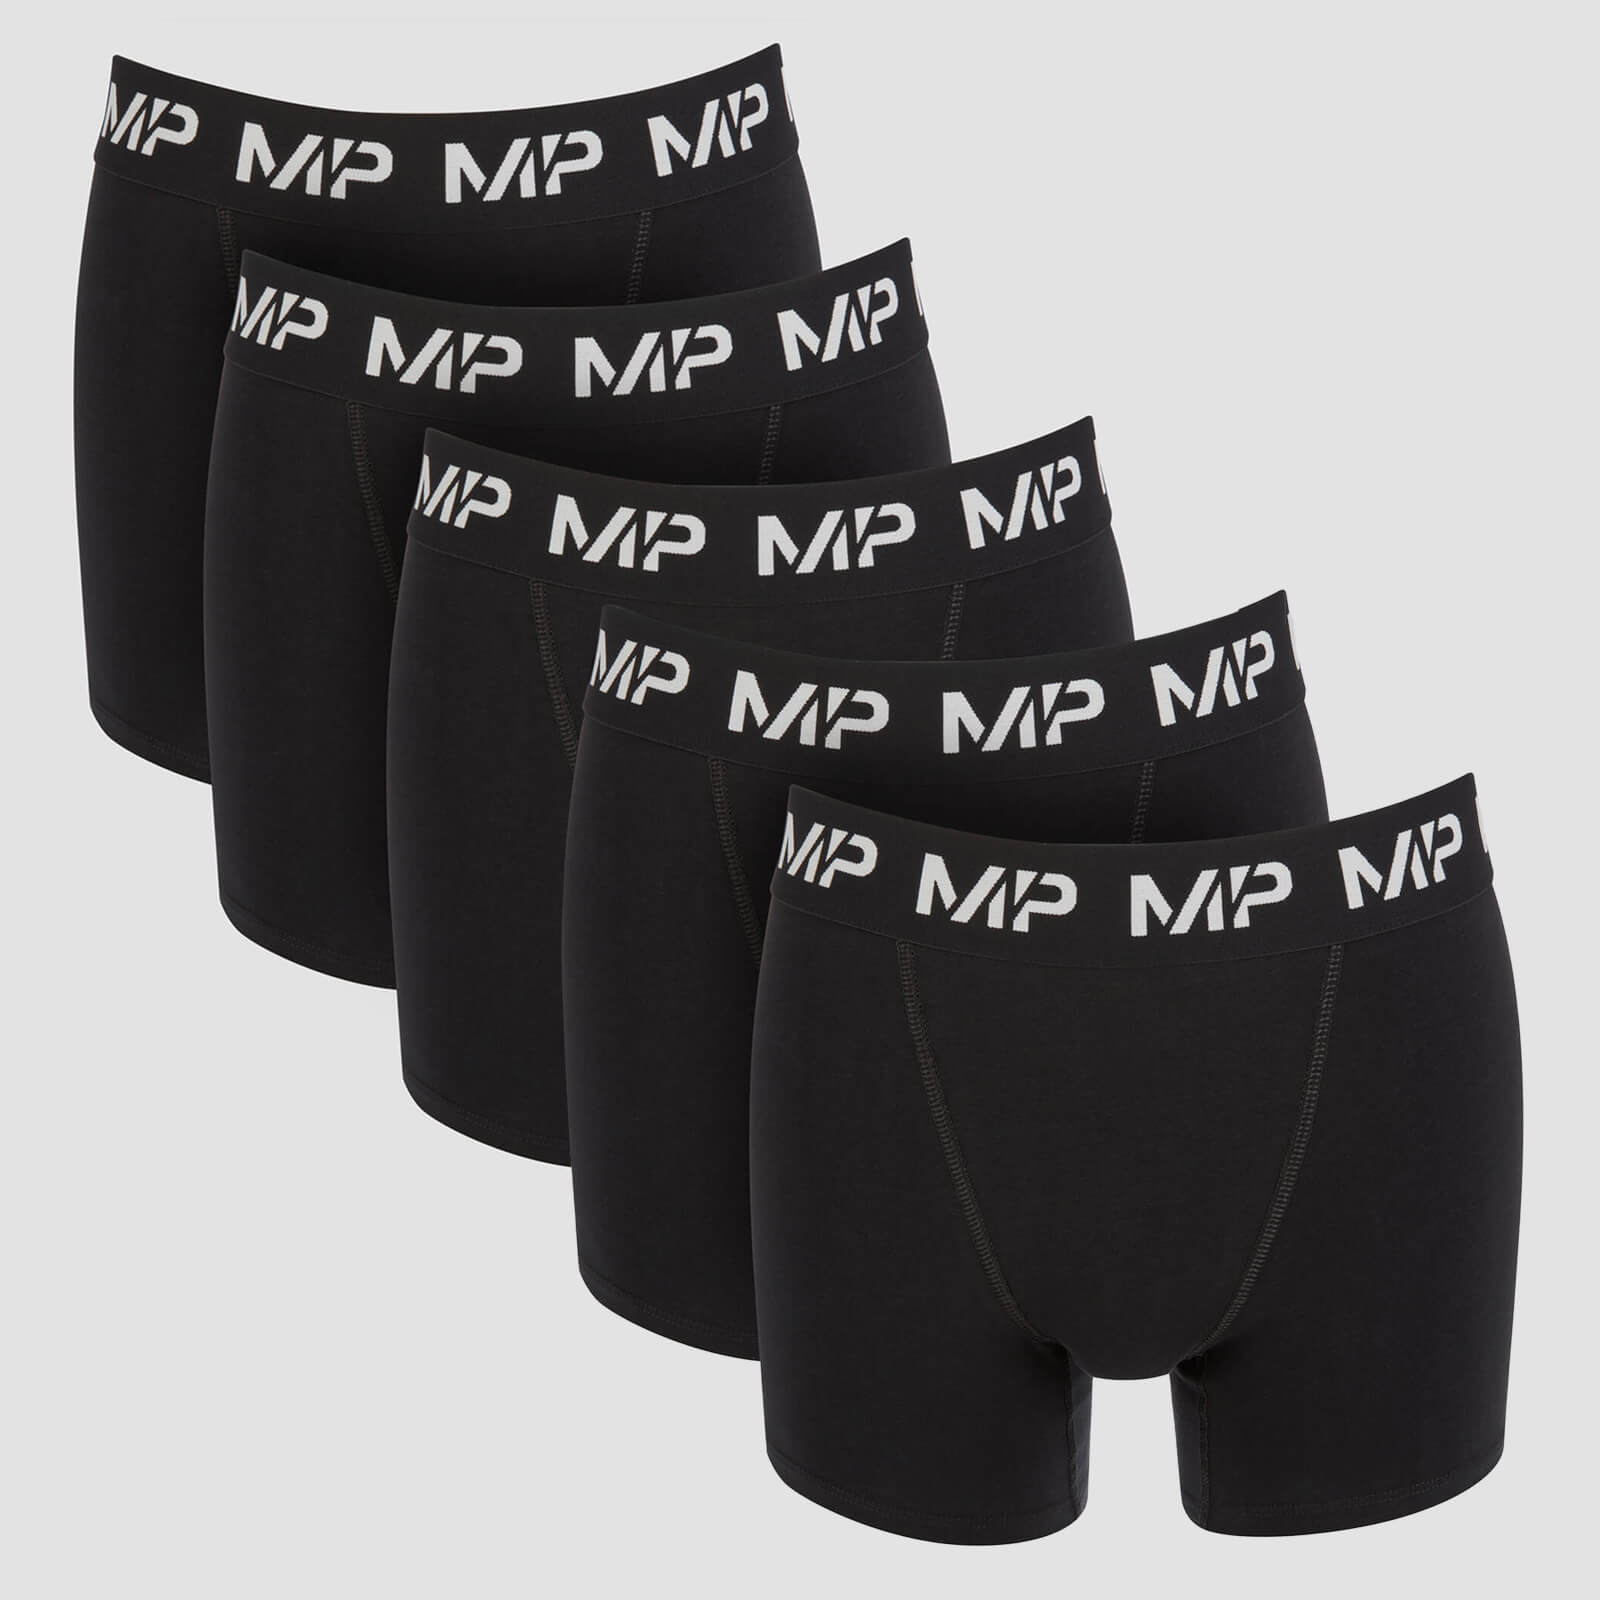 MP Men's Boxers (5 Pack) – Black - S